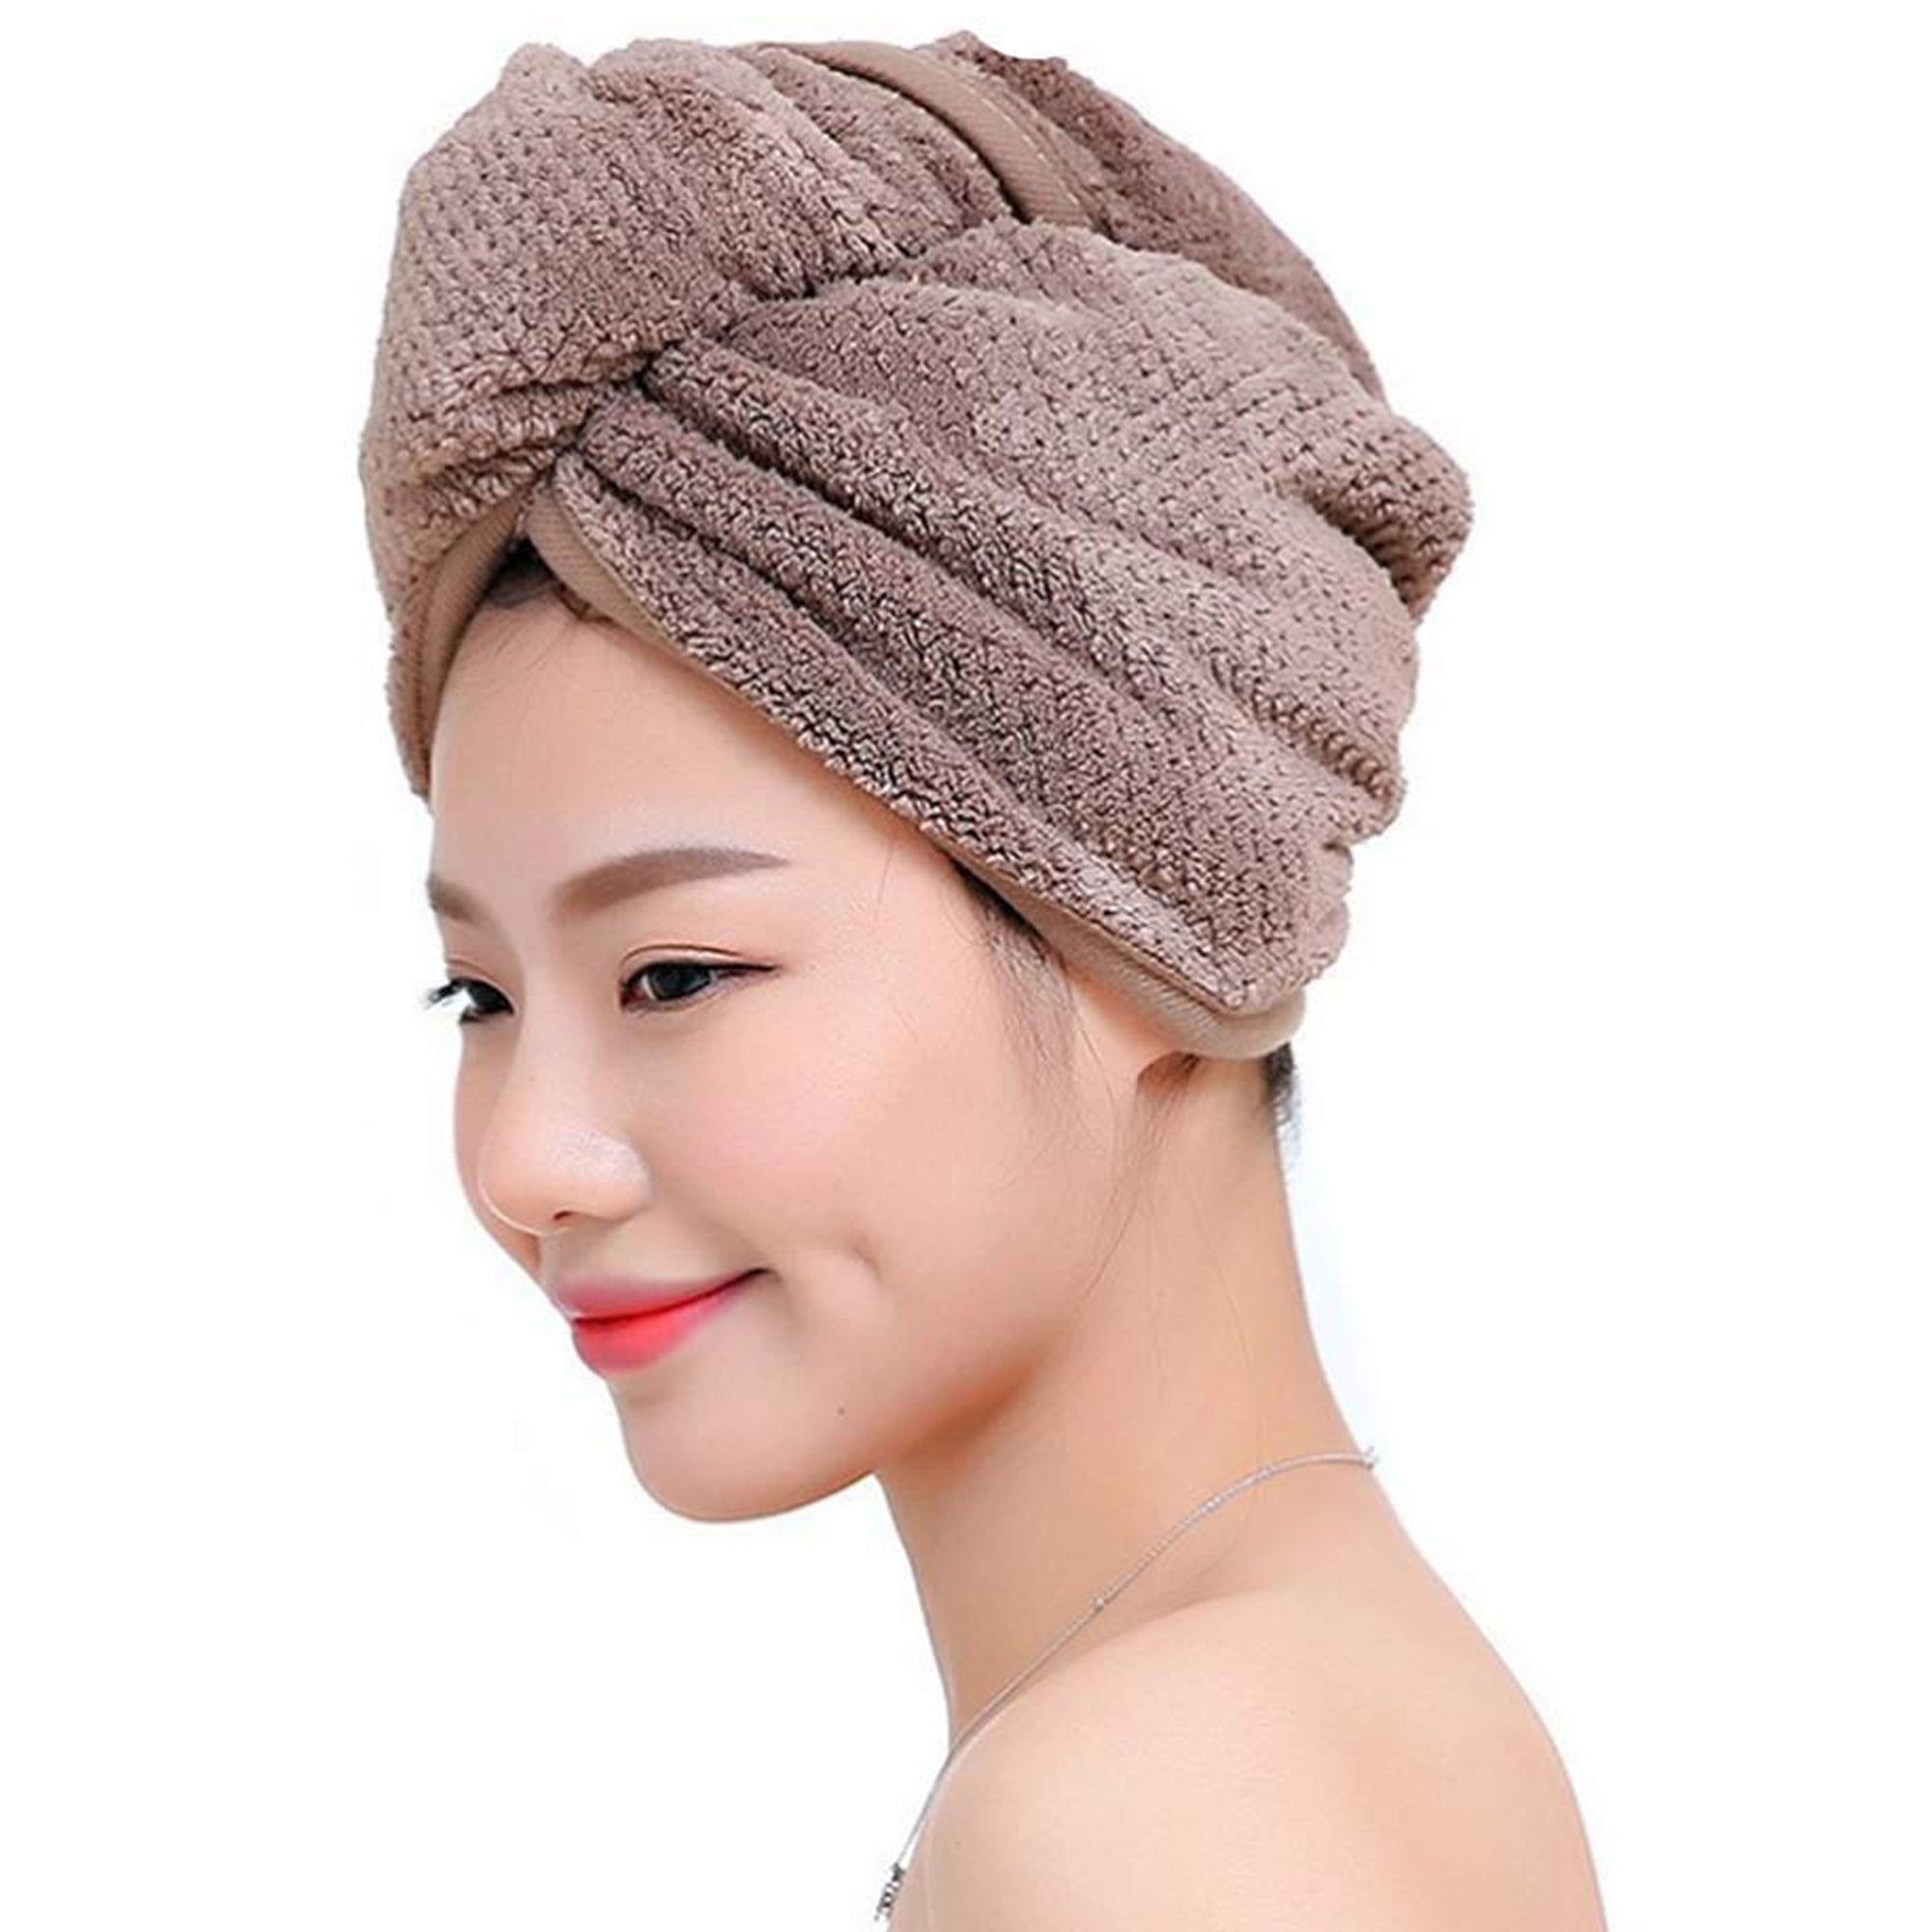 1x Microfiber Bath Towel Quick Dry Hair Magic Turban Wrap Hat Spa Bathing